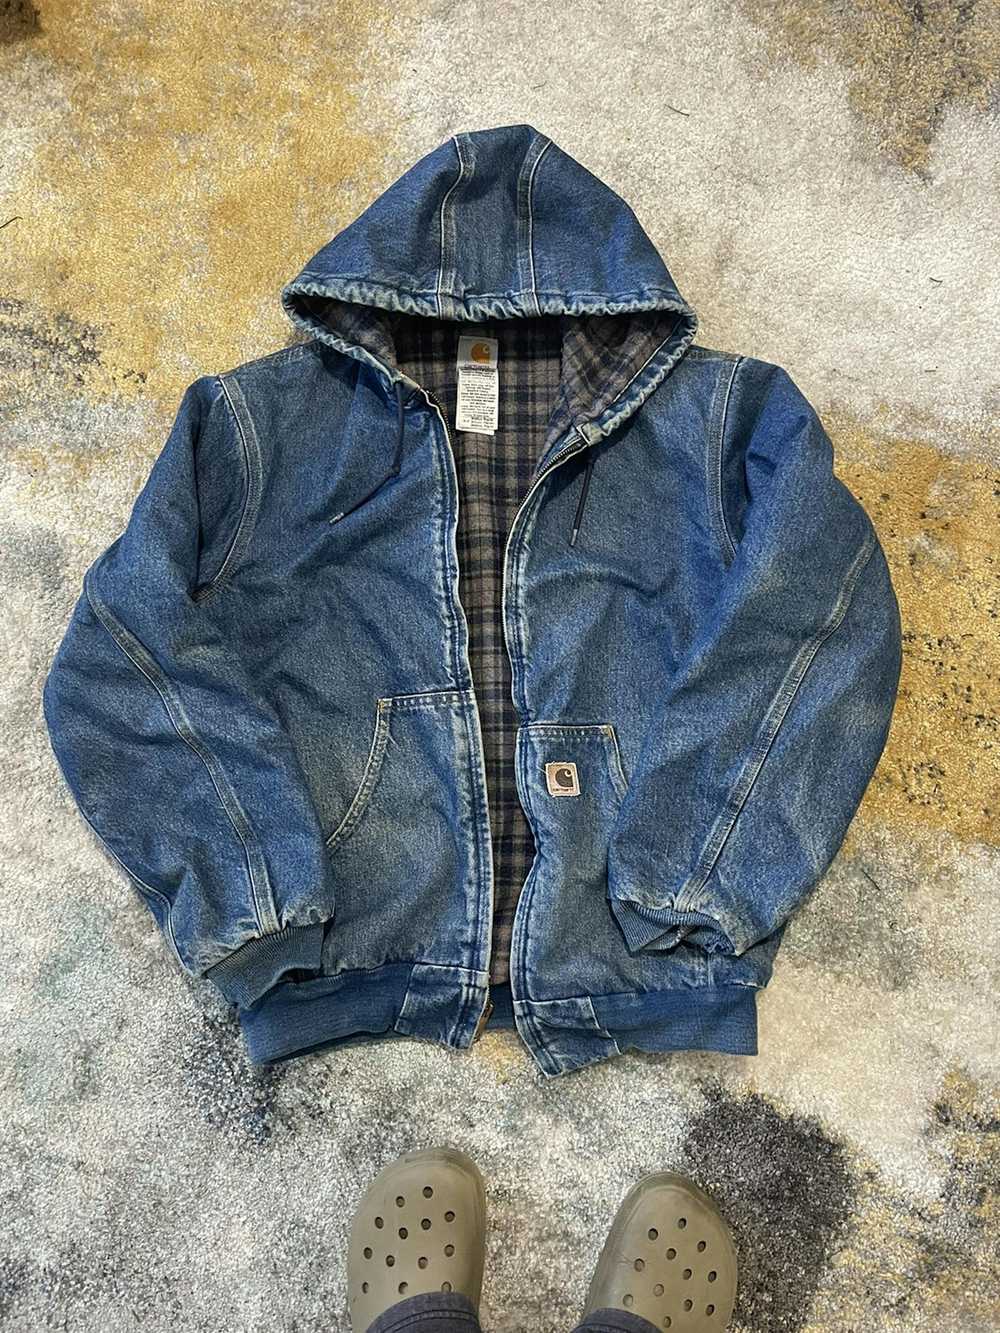 Carhartt Carhartt rare vintage jacket - image 1